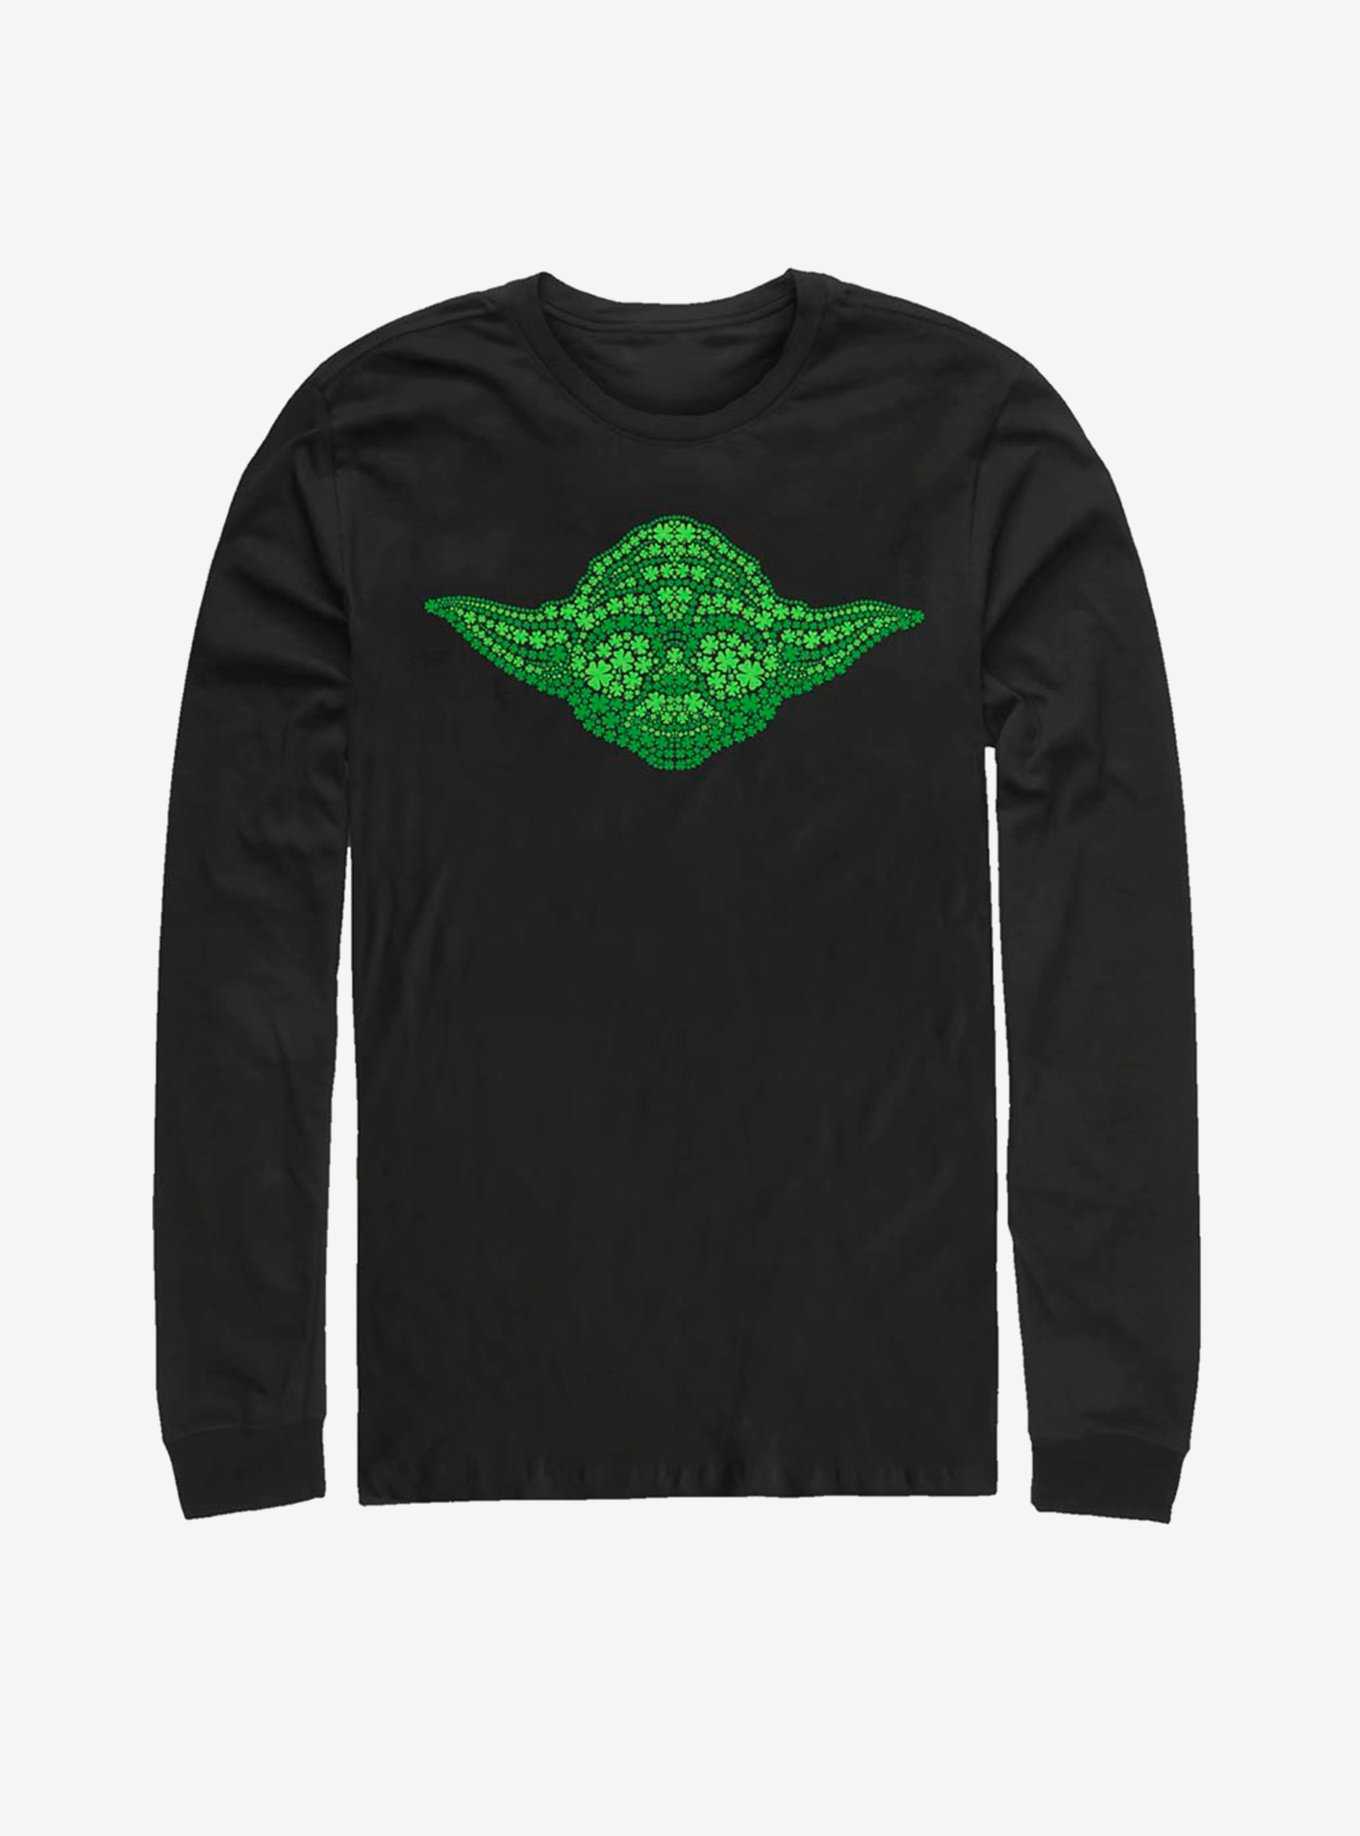 Star Wars Yoda Clovers Long-Sleeve T-Shirt, , hi-res